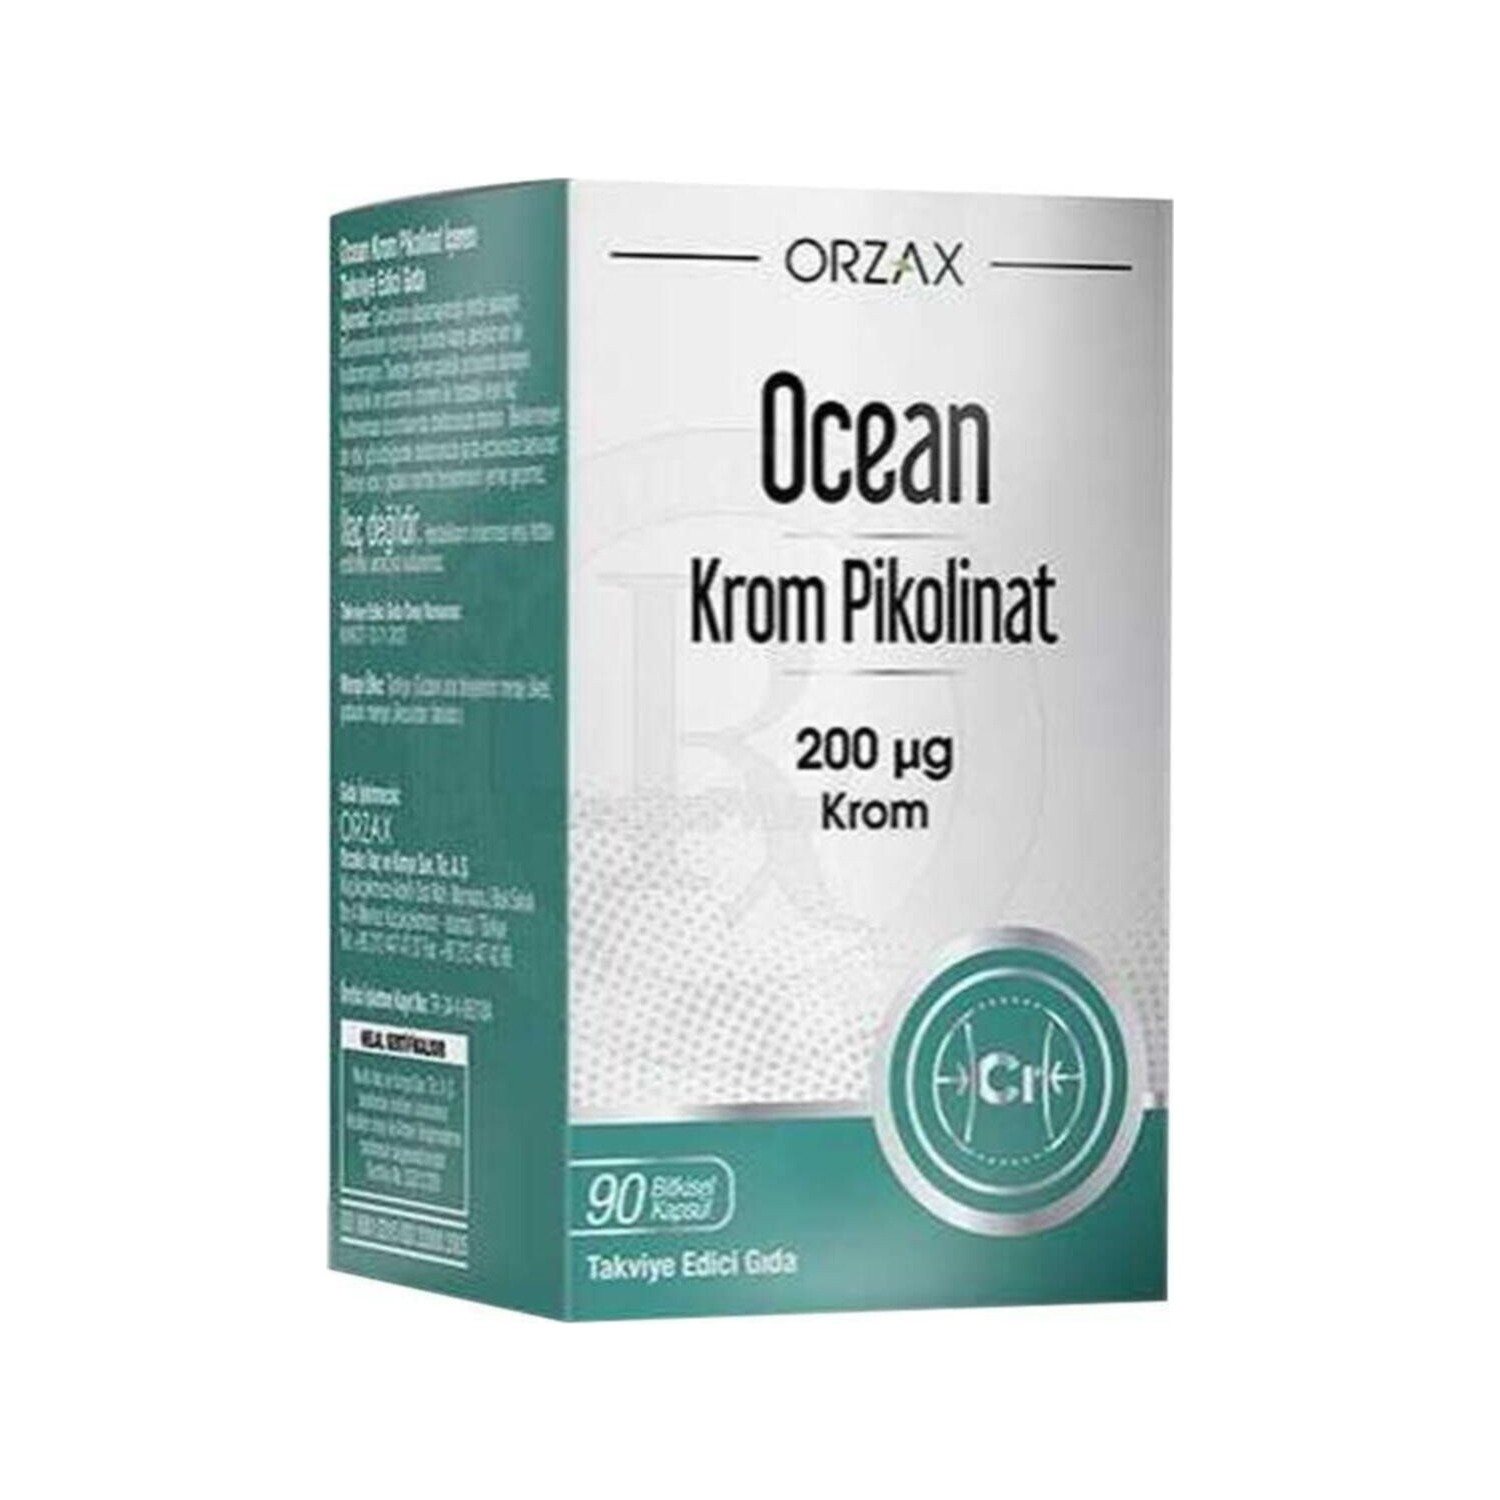 Пиколинат хрома Ocean 20 мкг, 90 капсул atech nutrition premium chrome picolinate